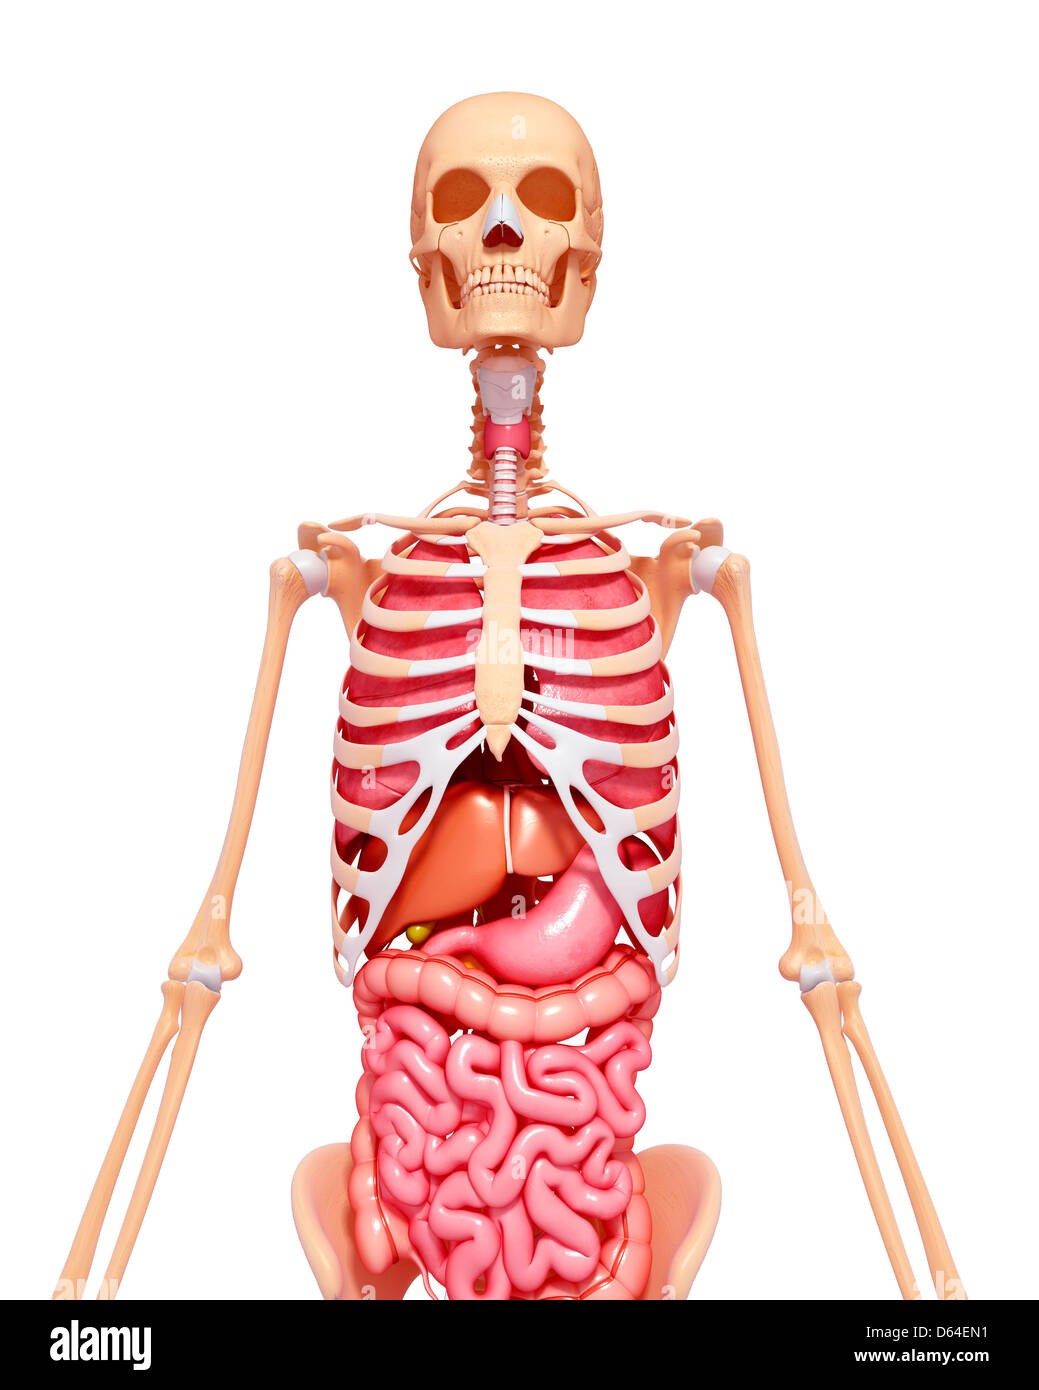 Female anatomy, artwork Stock Photo - Alamy